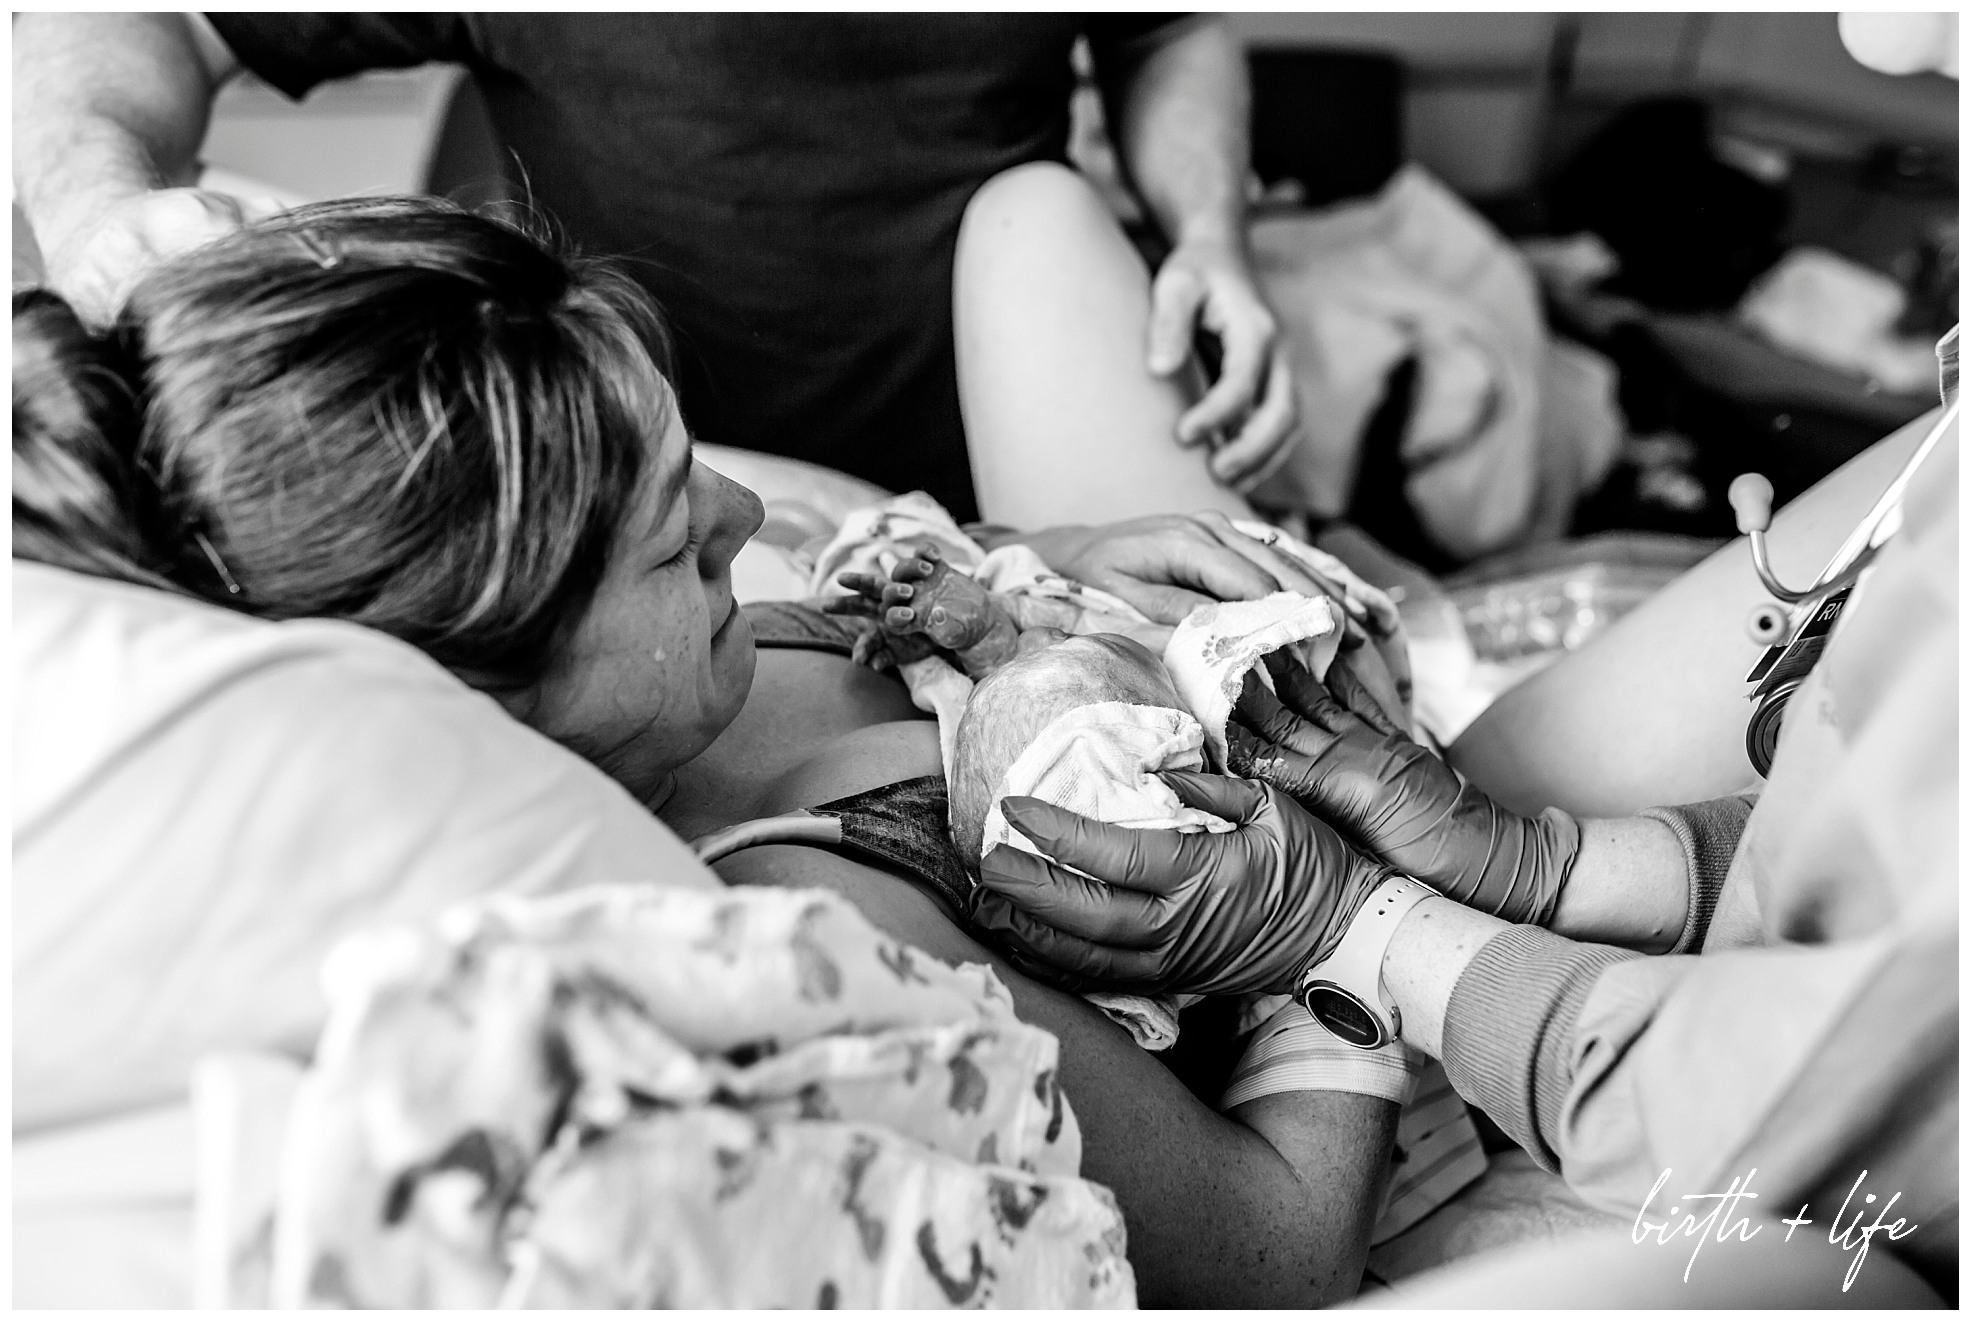 dfw-birth-and-life-photography-family-photojournalism-documentary-birth-storyacclaim-midwives-clark031.jpg